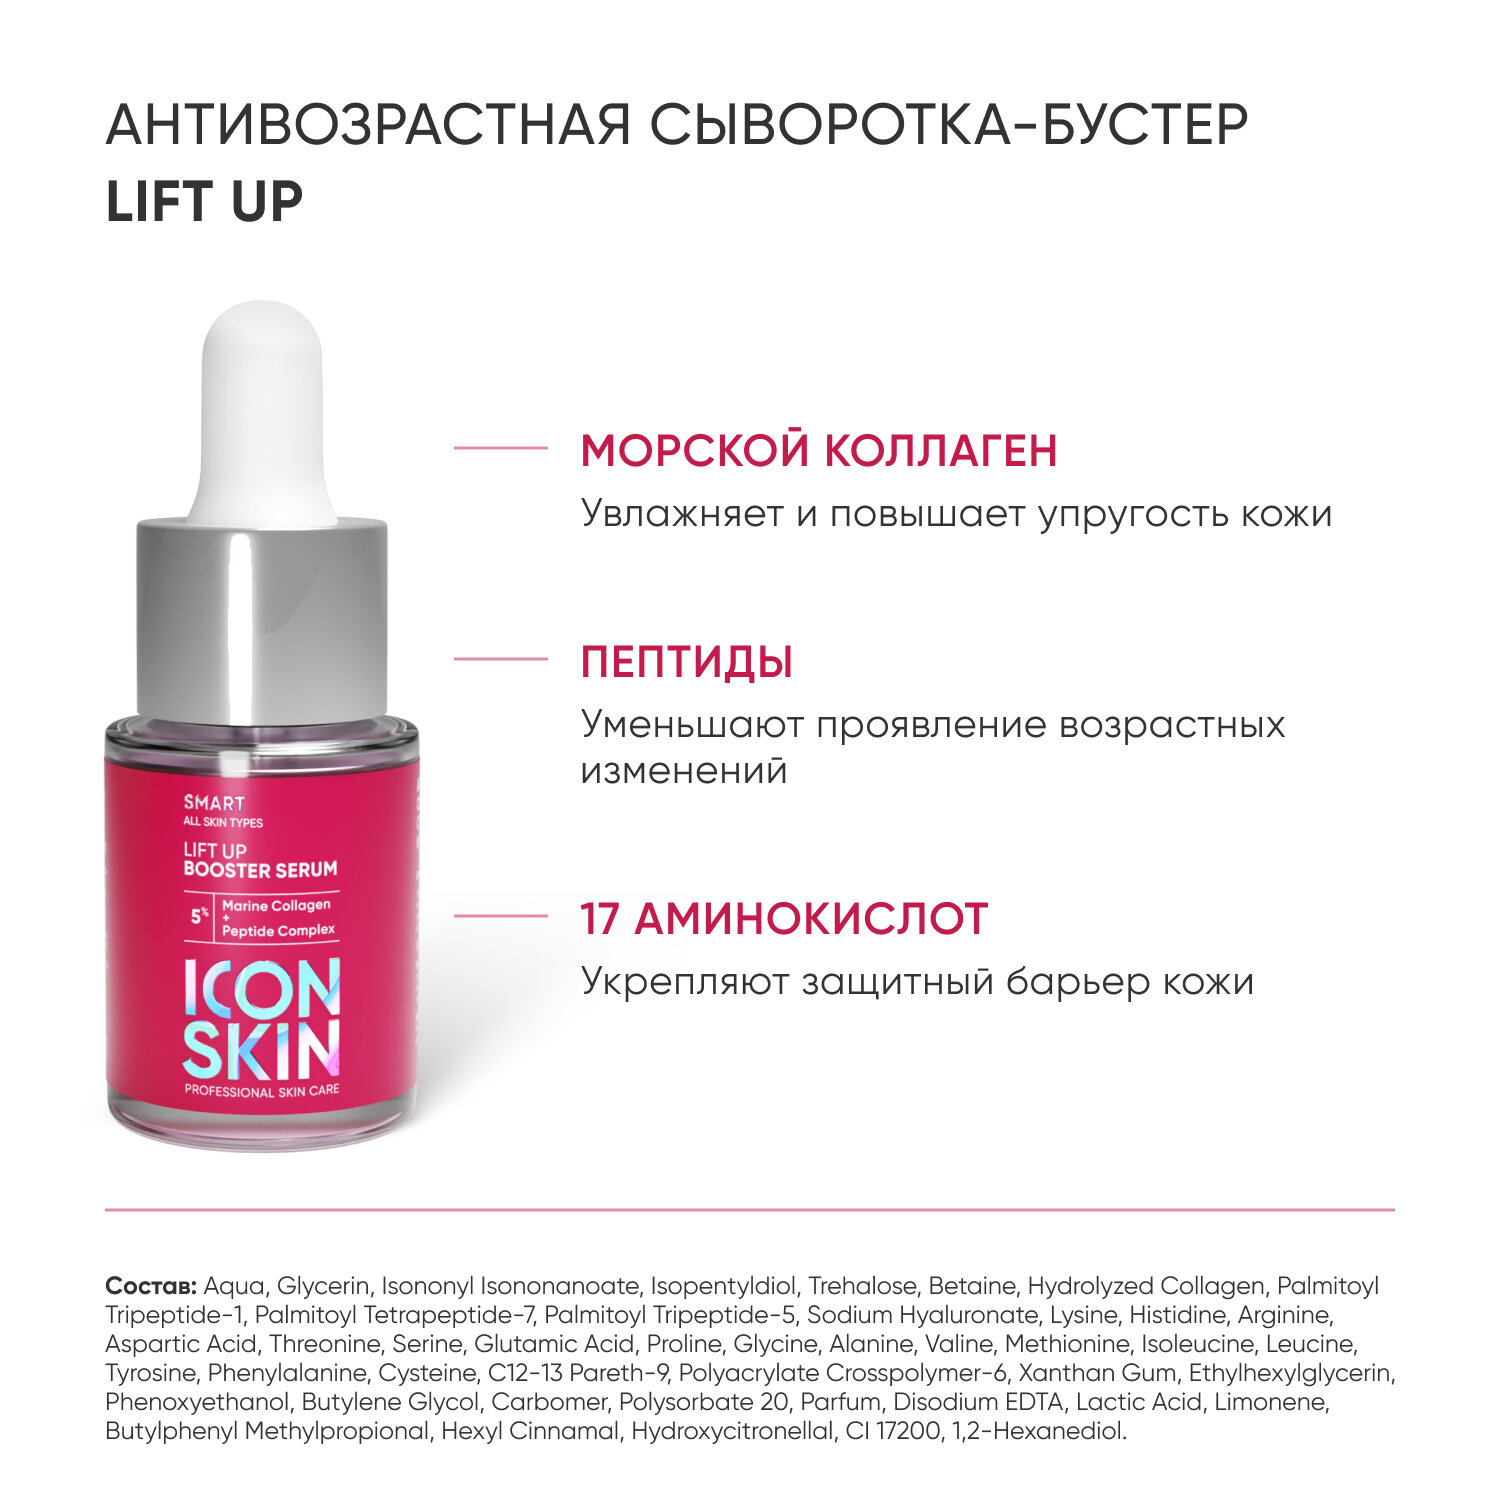 ICON SKIN Набор сывороток-концентратов в мини-формате для всех типов кожи BOOST YOUR SKIN, 4 средства